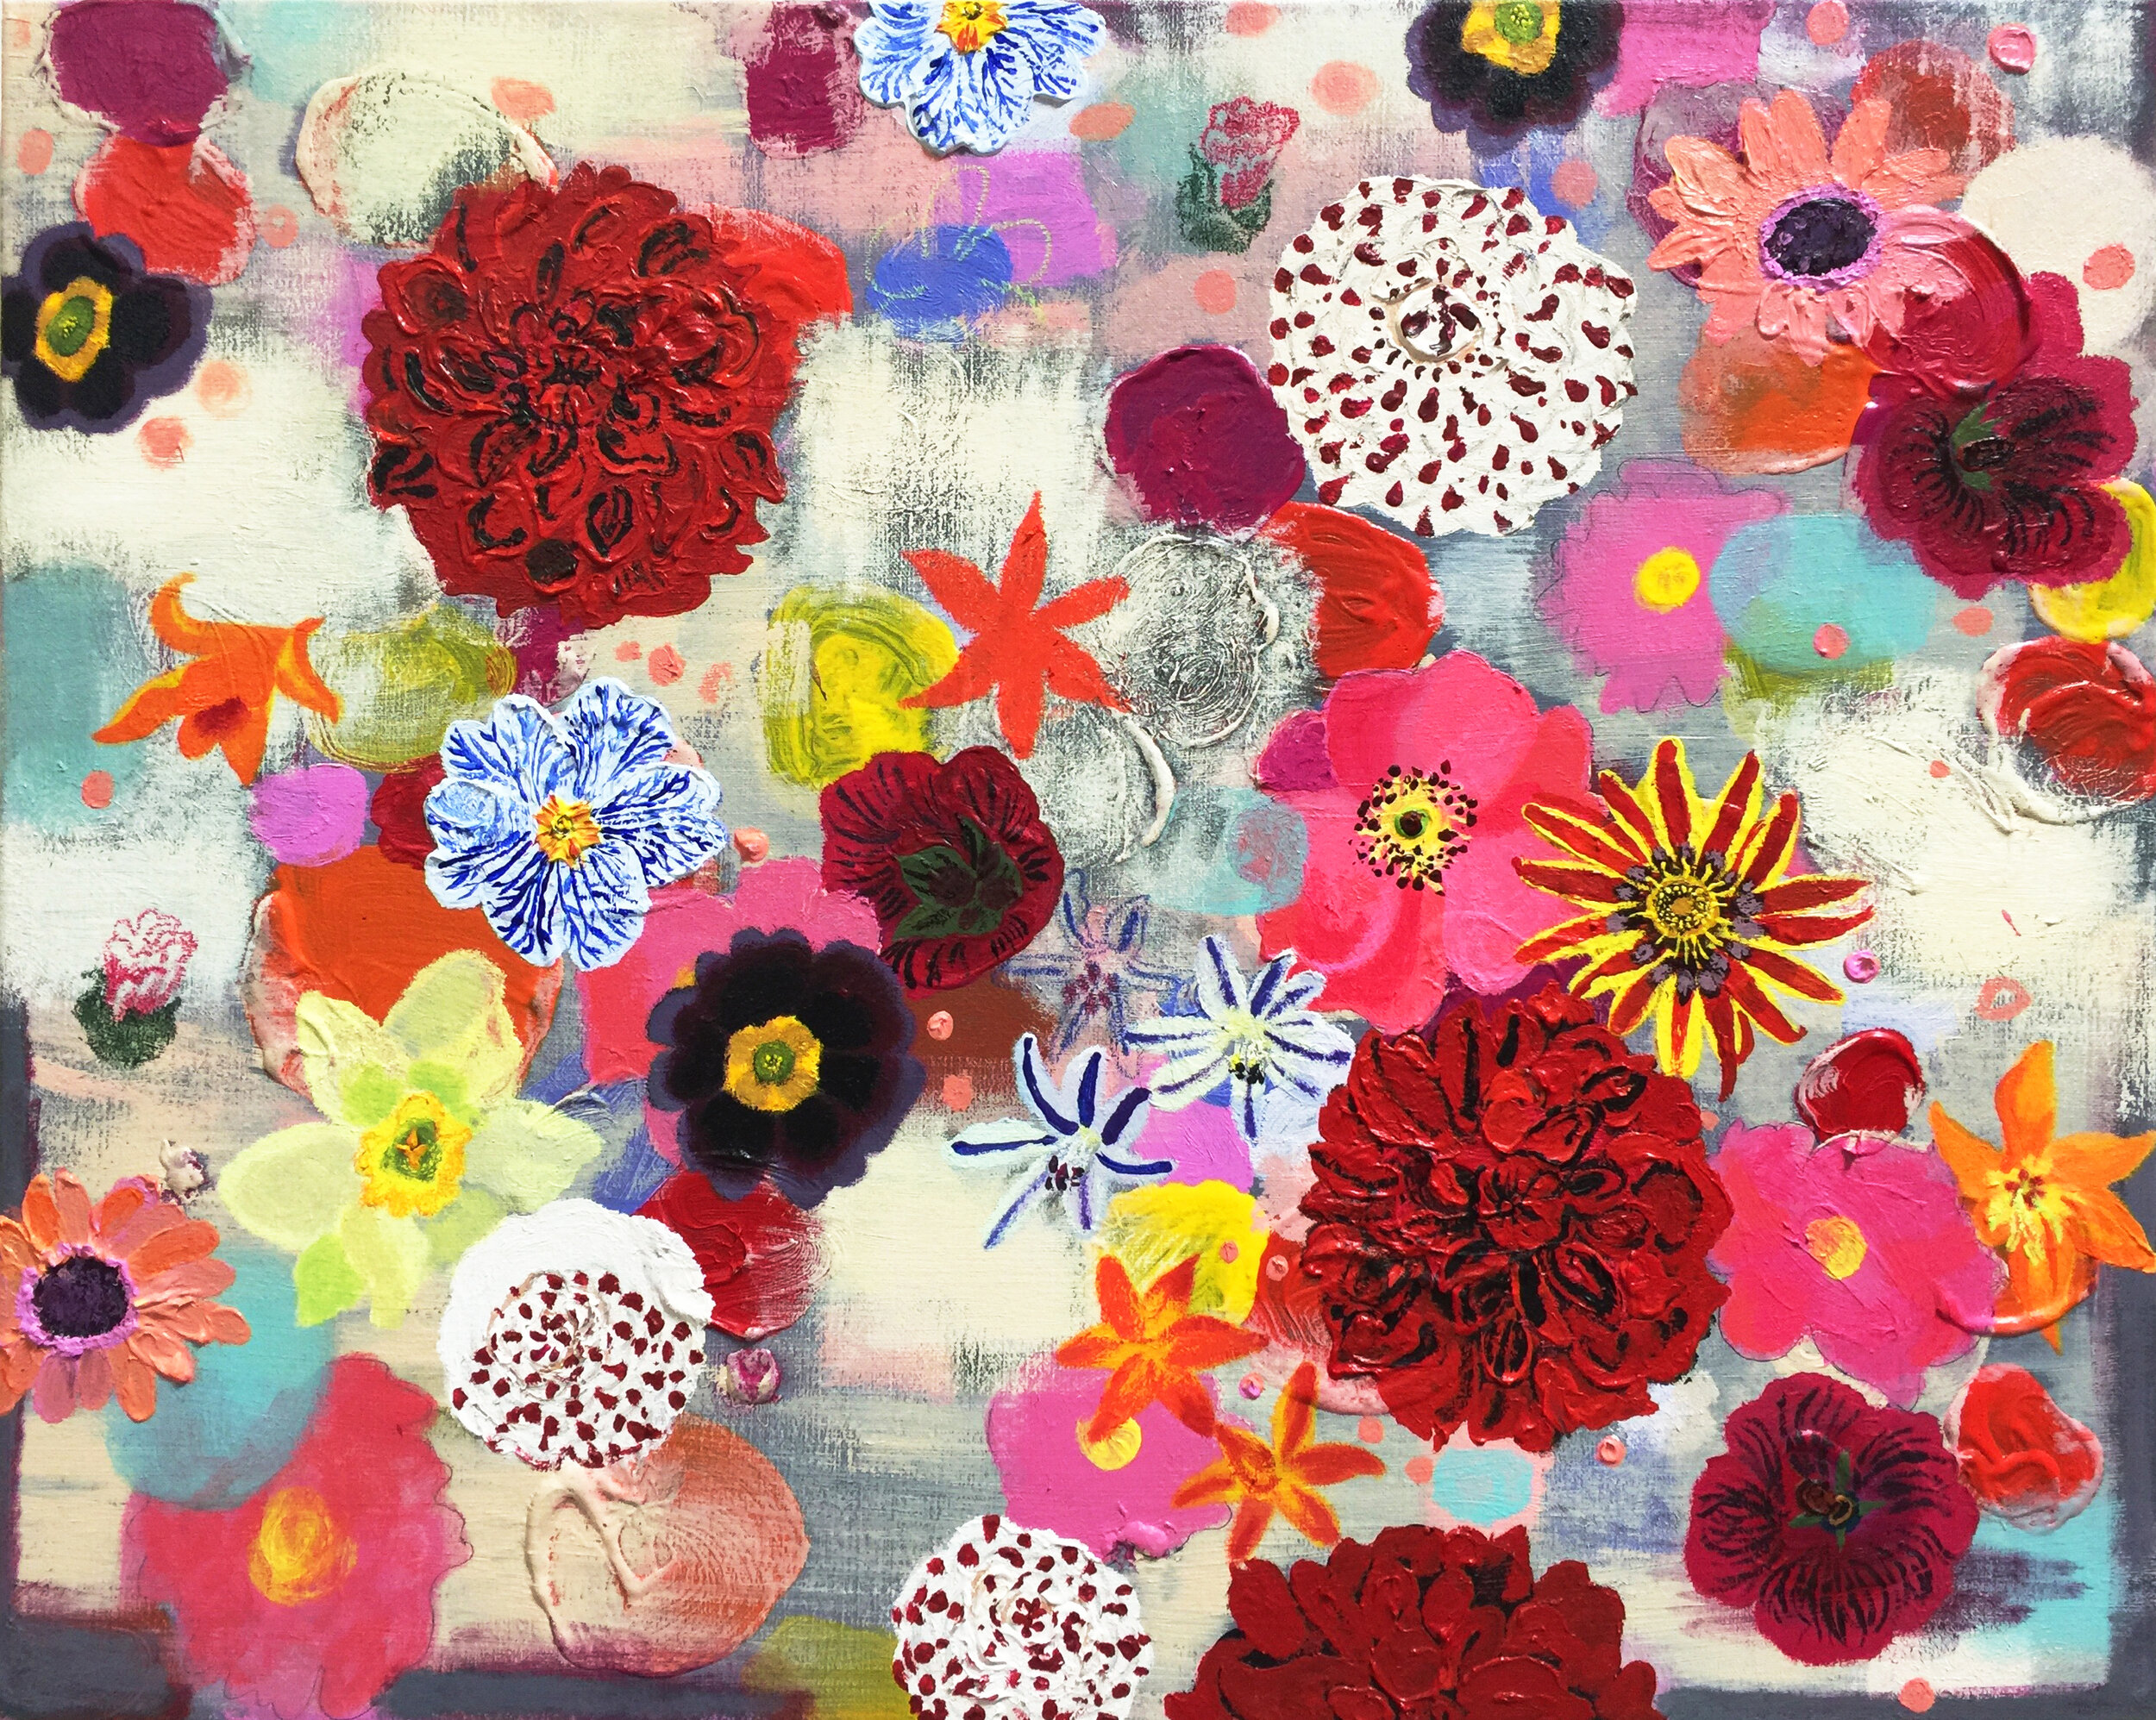 9 Millions-of-flowers, acrylic, oil pastels on linen, 24 x 30 in.jpg